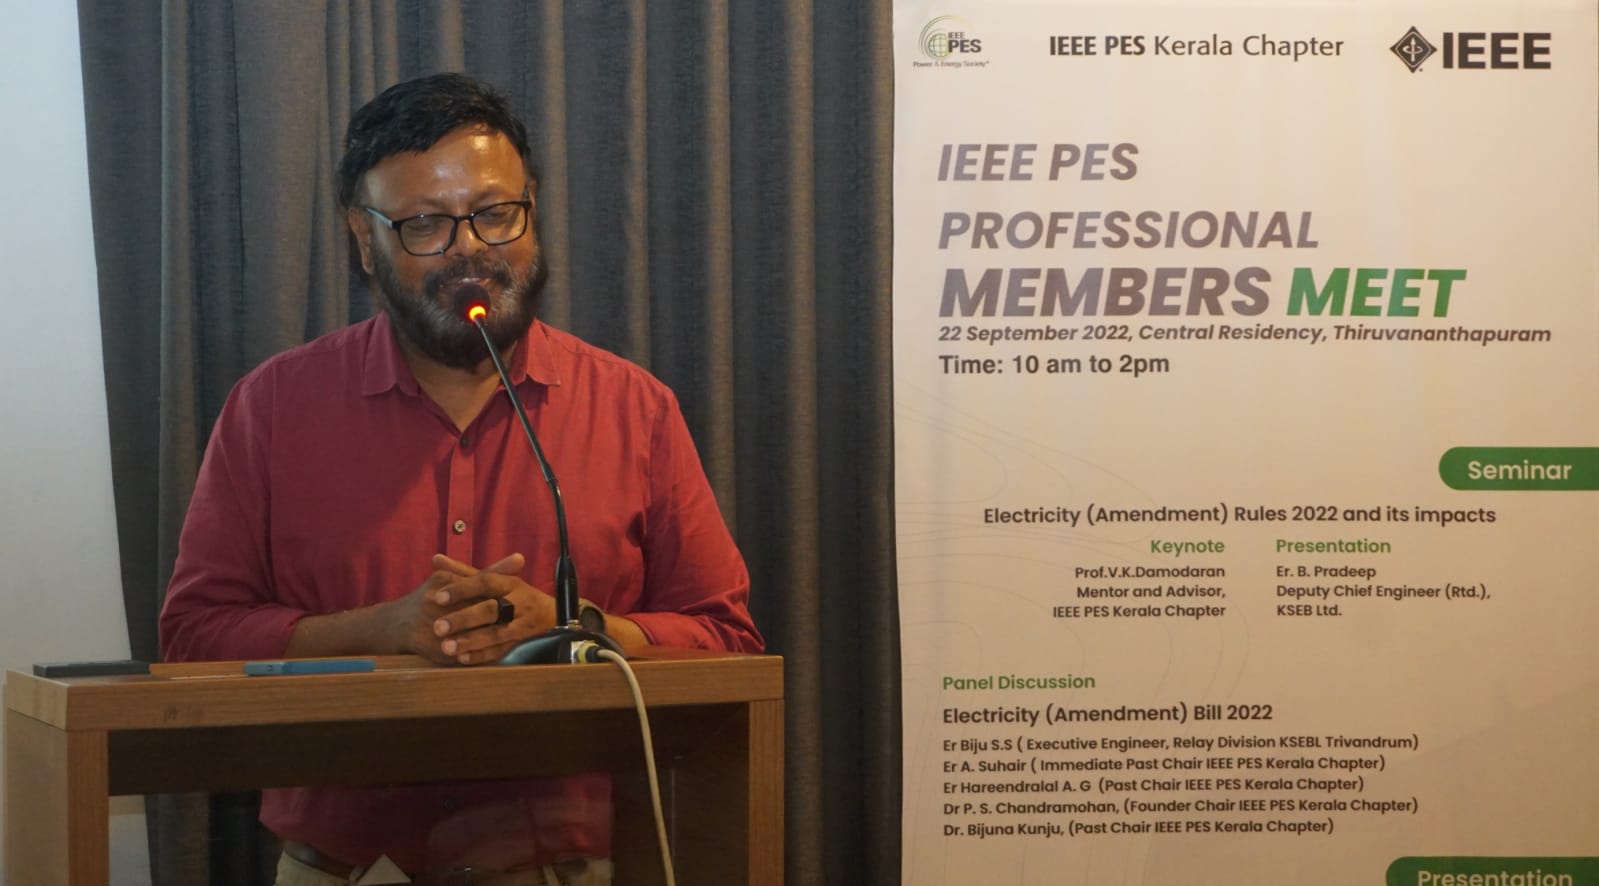 IEEE PES professional members meet held on 25th September at Central Residency, Thiruvananthapuram